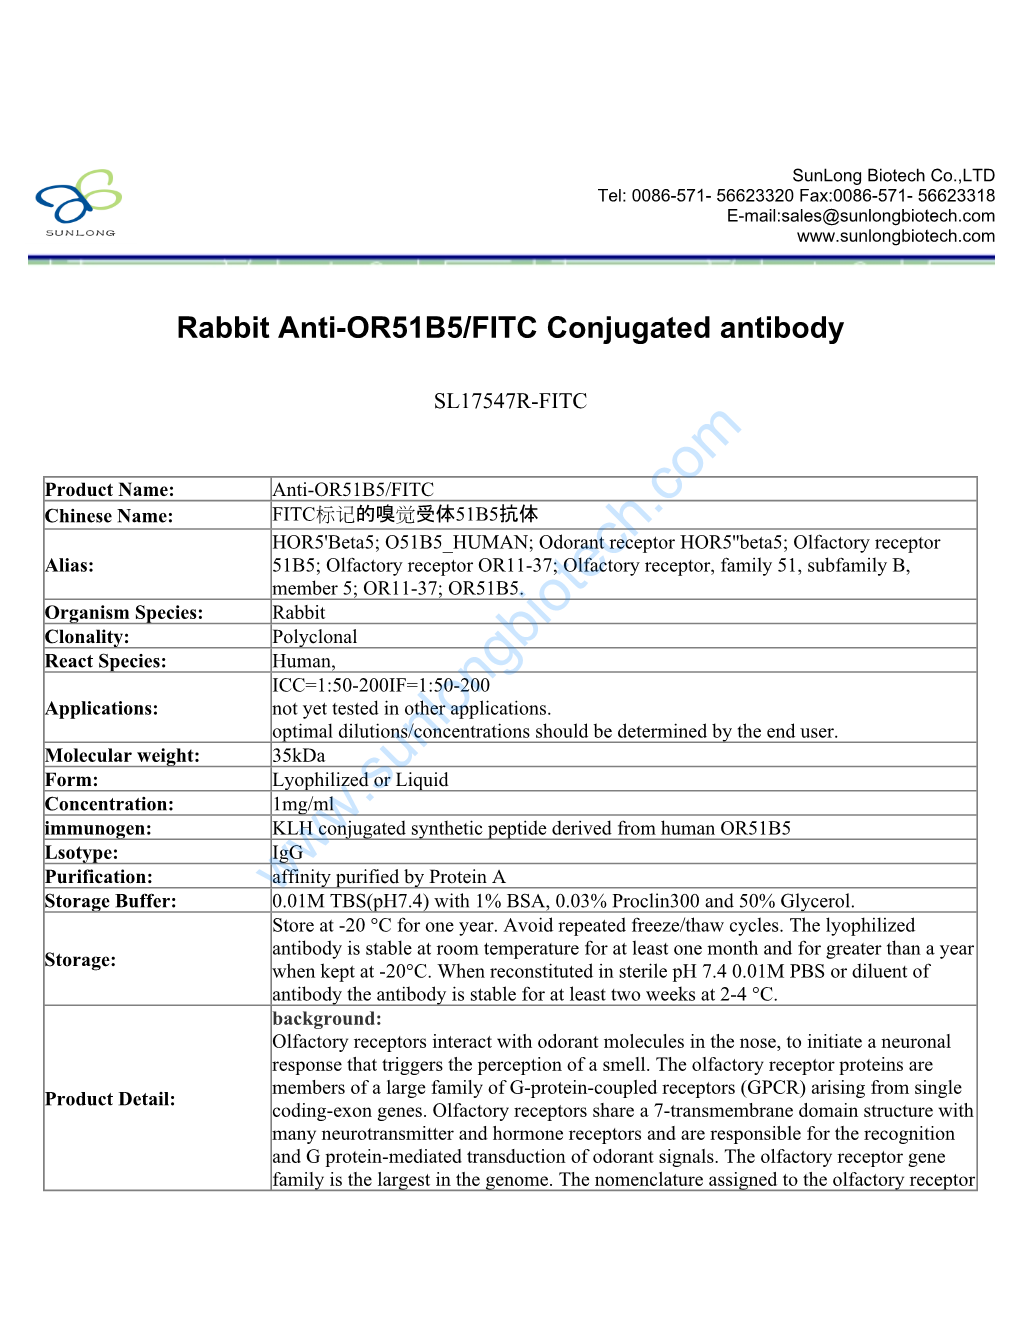 Rabbit Anti-OR51B5/FITC Conjugated Antibody